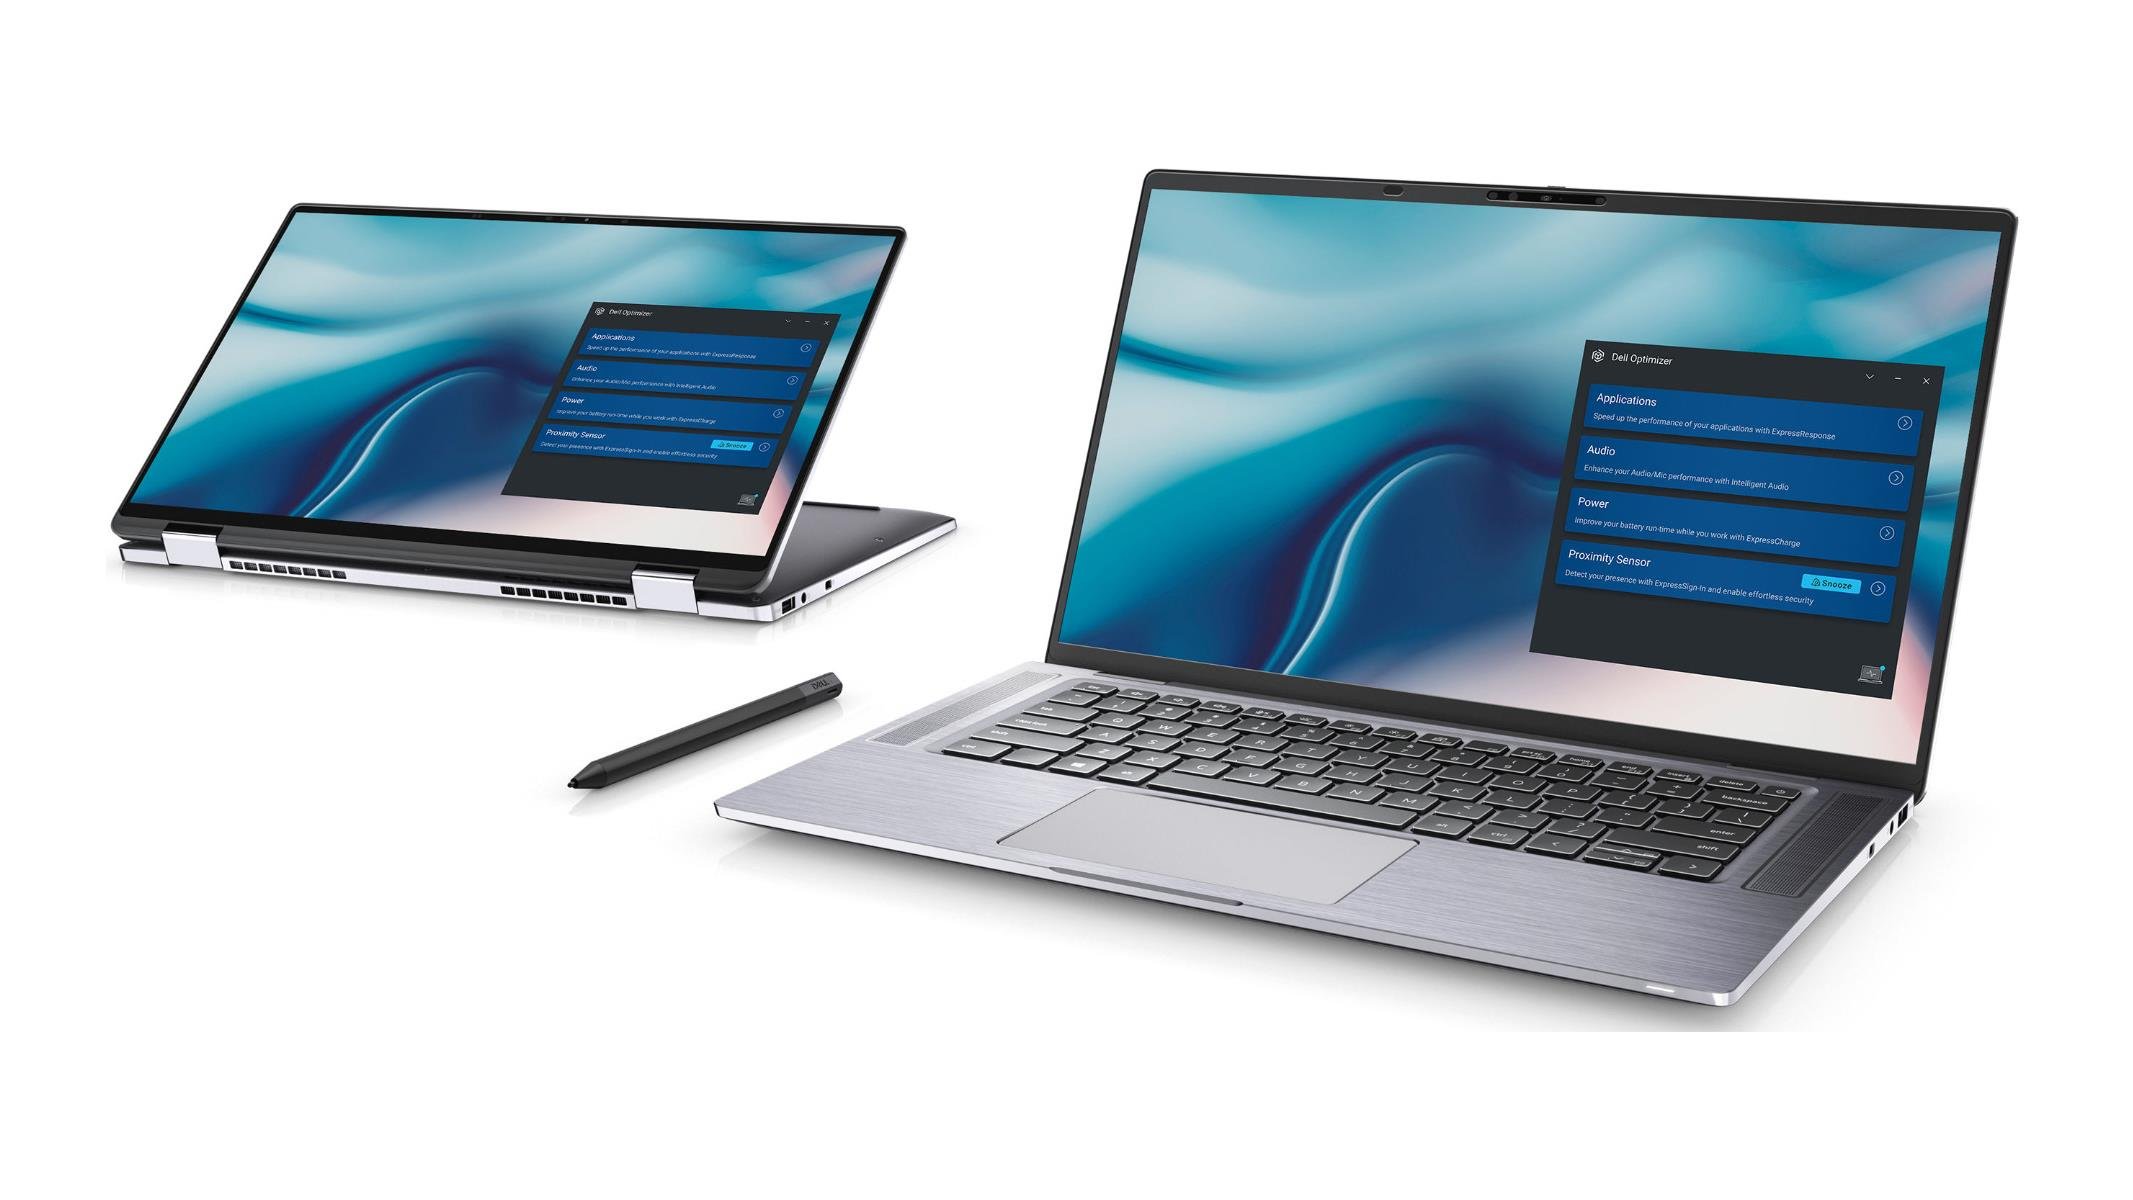 Dell Latitude 9000 And Precision 5000 Business Laptops Deliver 10th Gen  Intel CPUs, NVIDIA Quadro GPUs | HotHardware